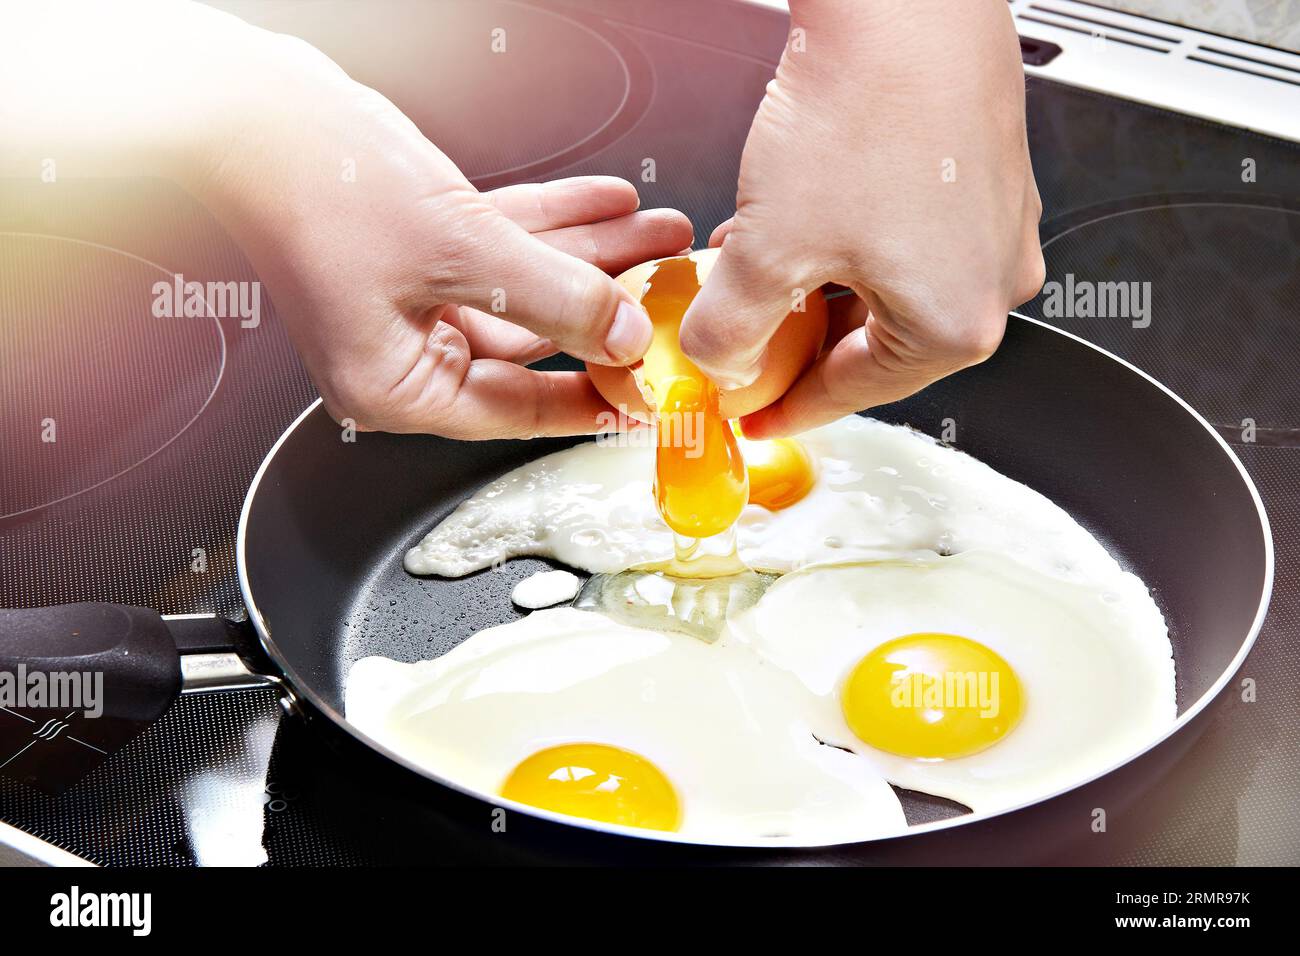 https://c8.alamy.com/comp/2RMR97K/woman-breaks-an-egg-in-fried-eggs-close-up-2RMR97K.jpg